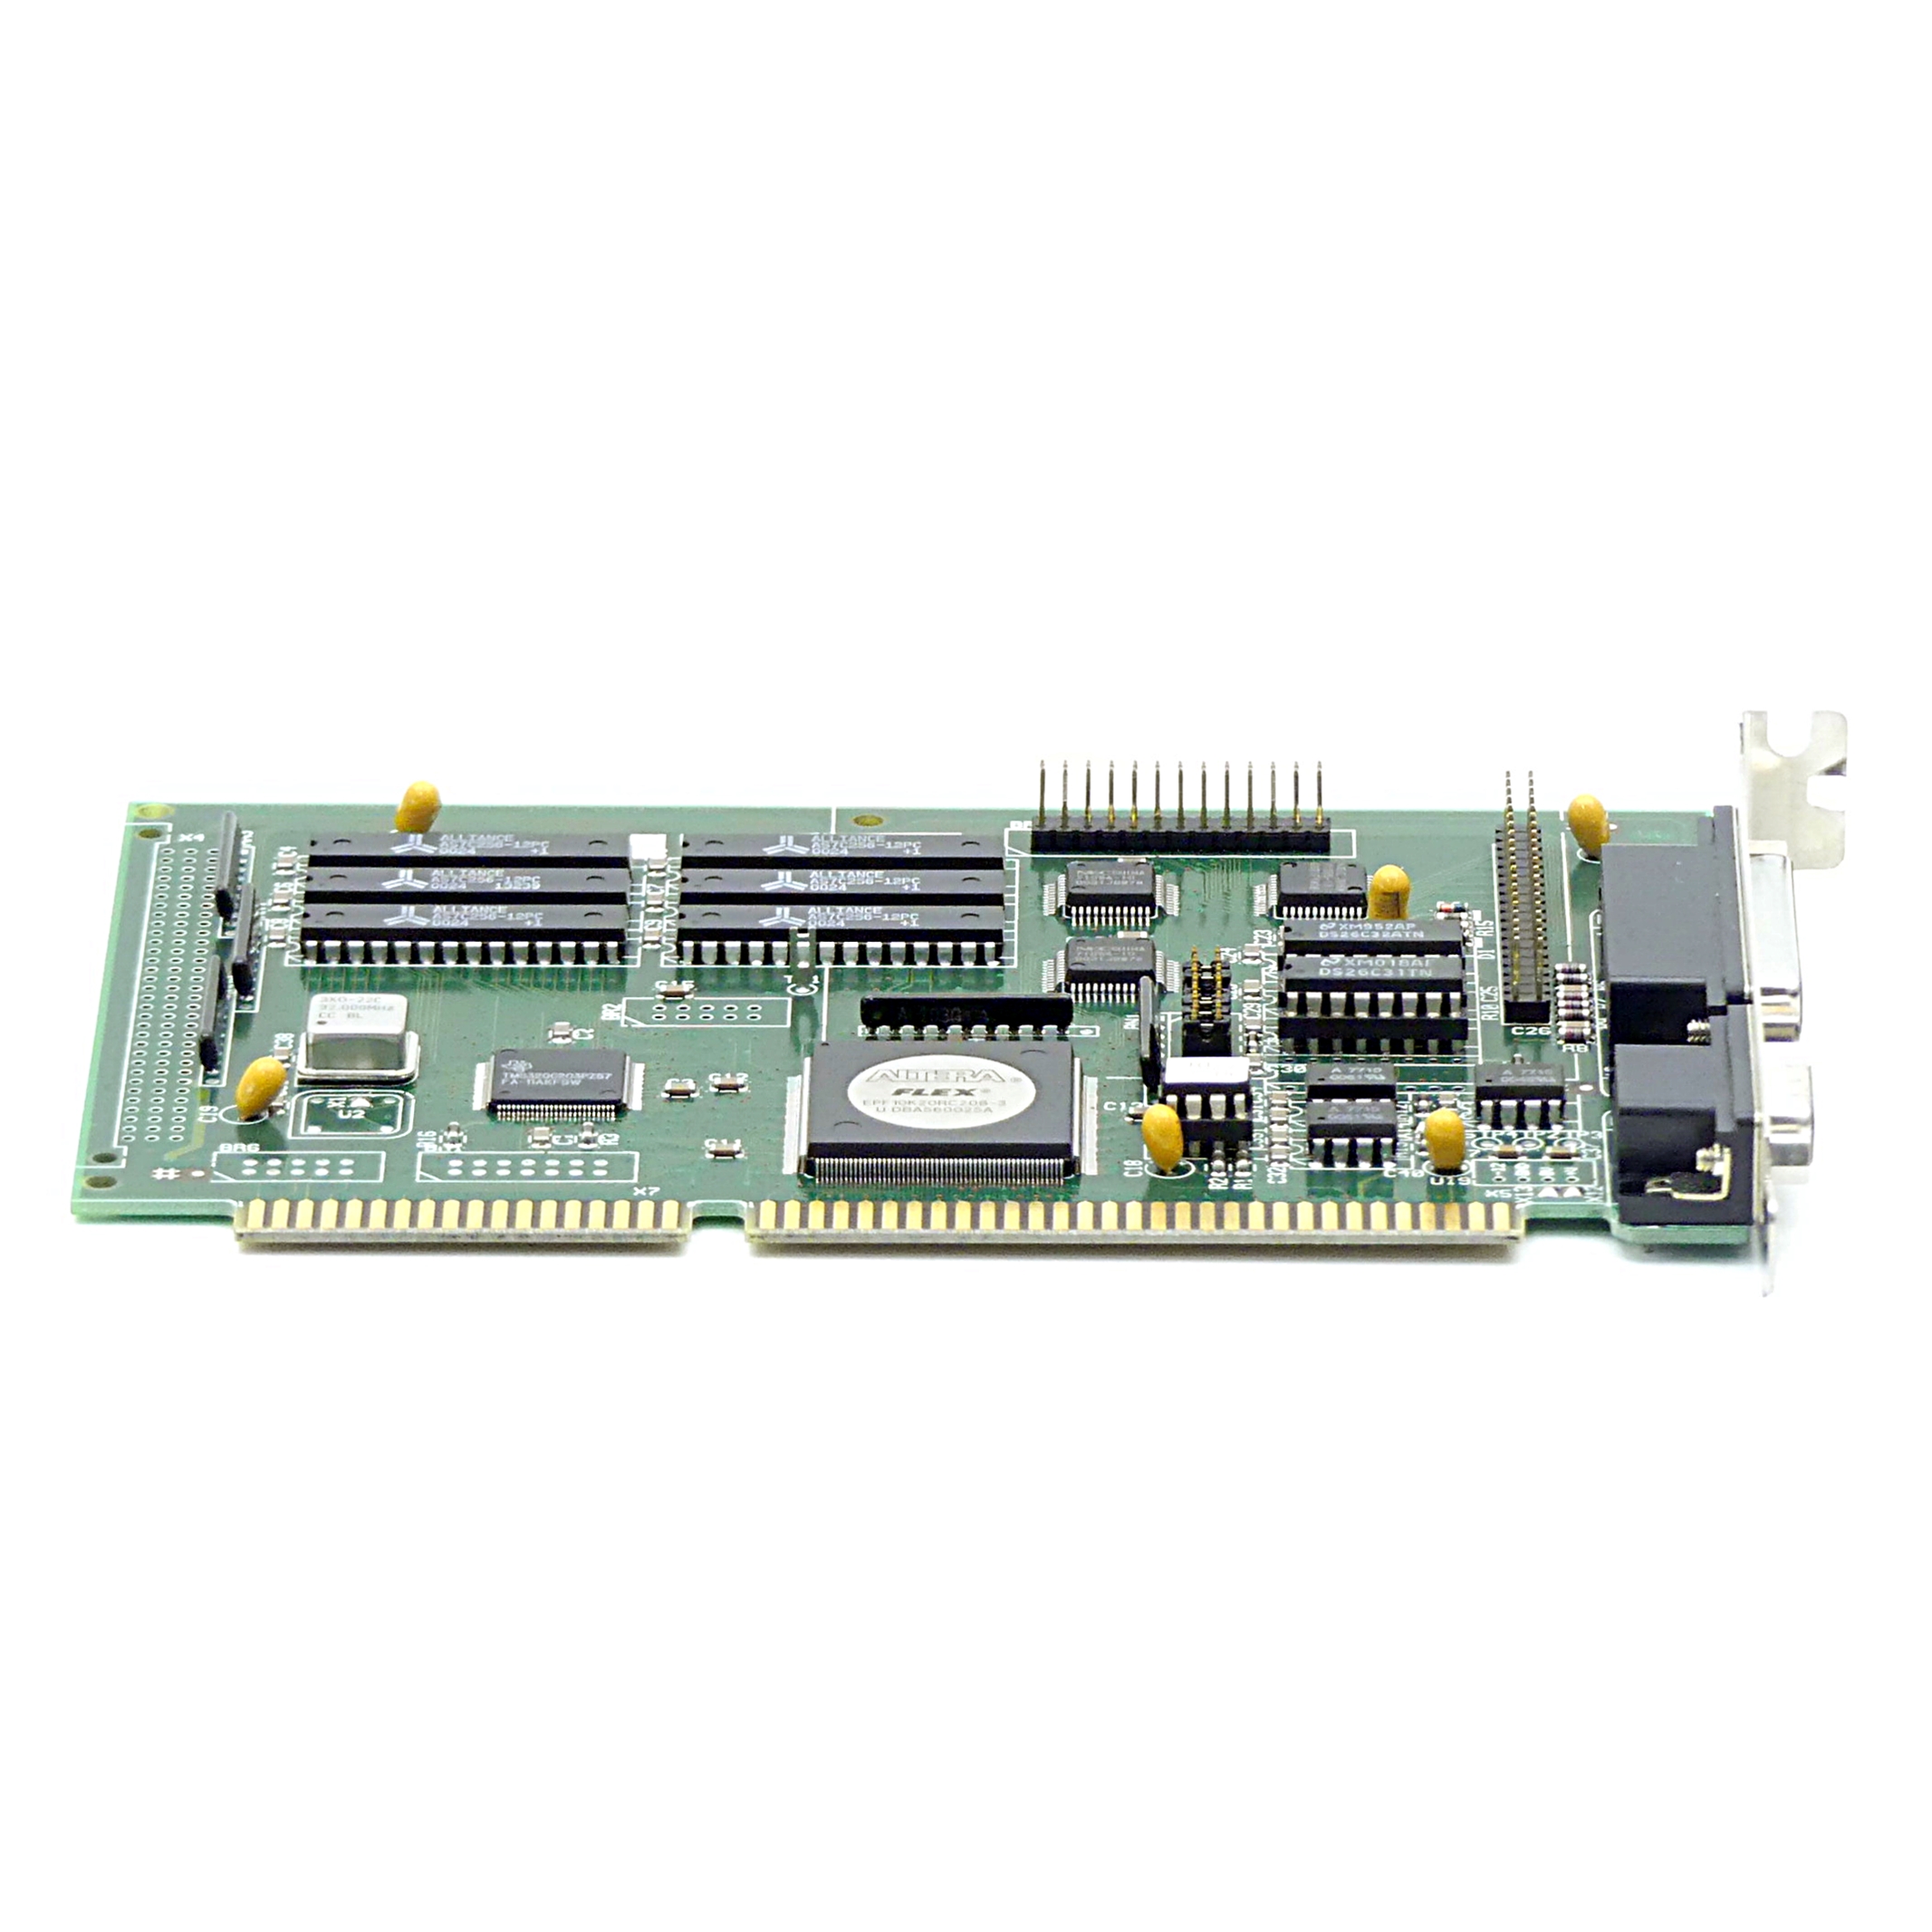 Laser interface board controller RTC2 V1.3 